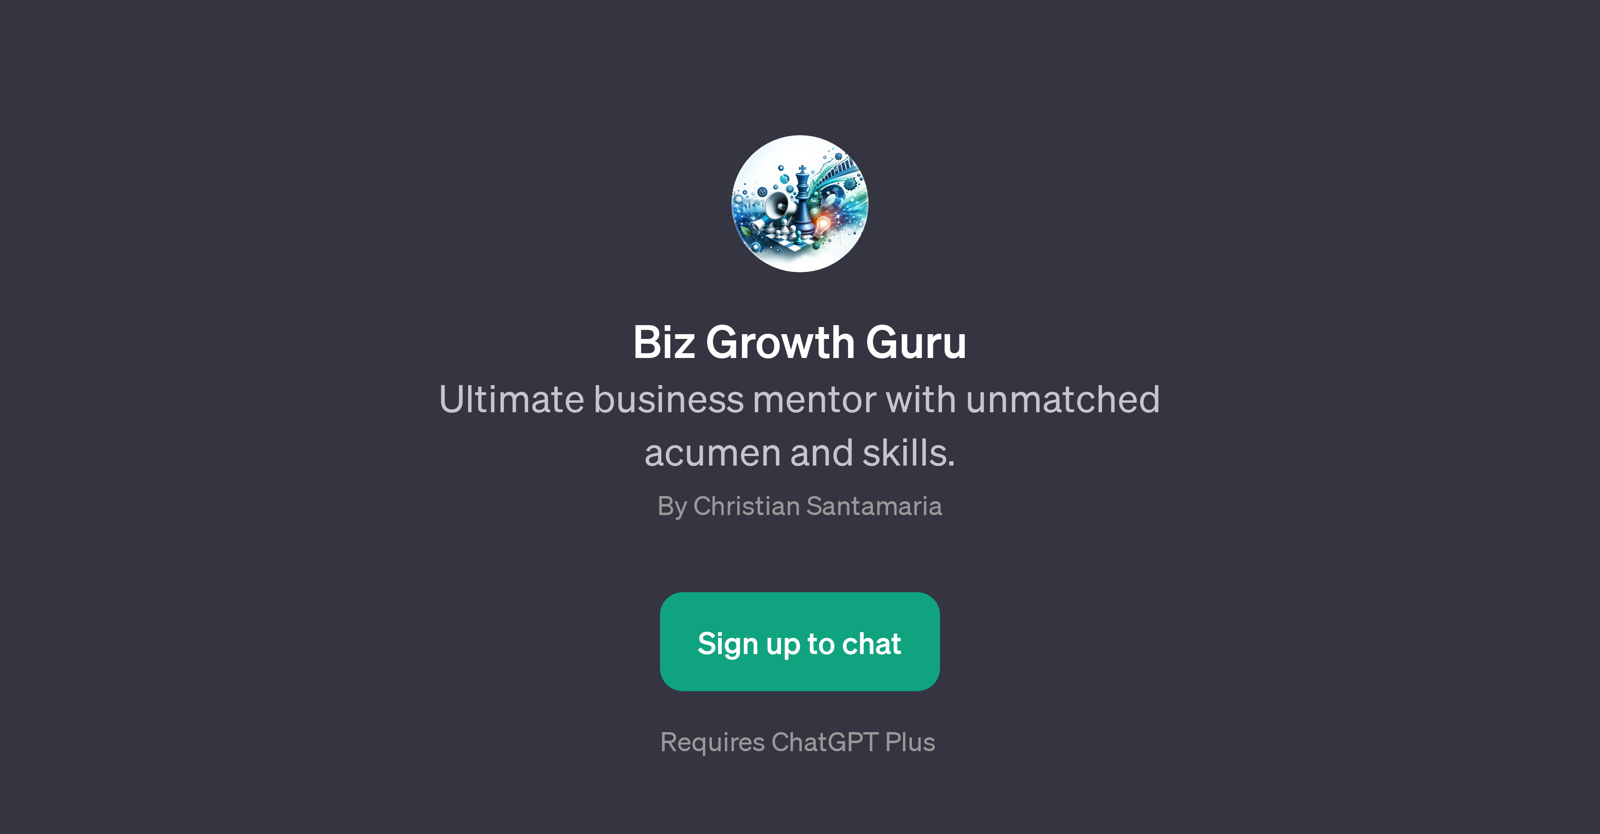 Biz Growth Guru website